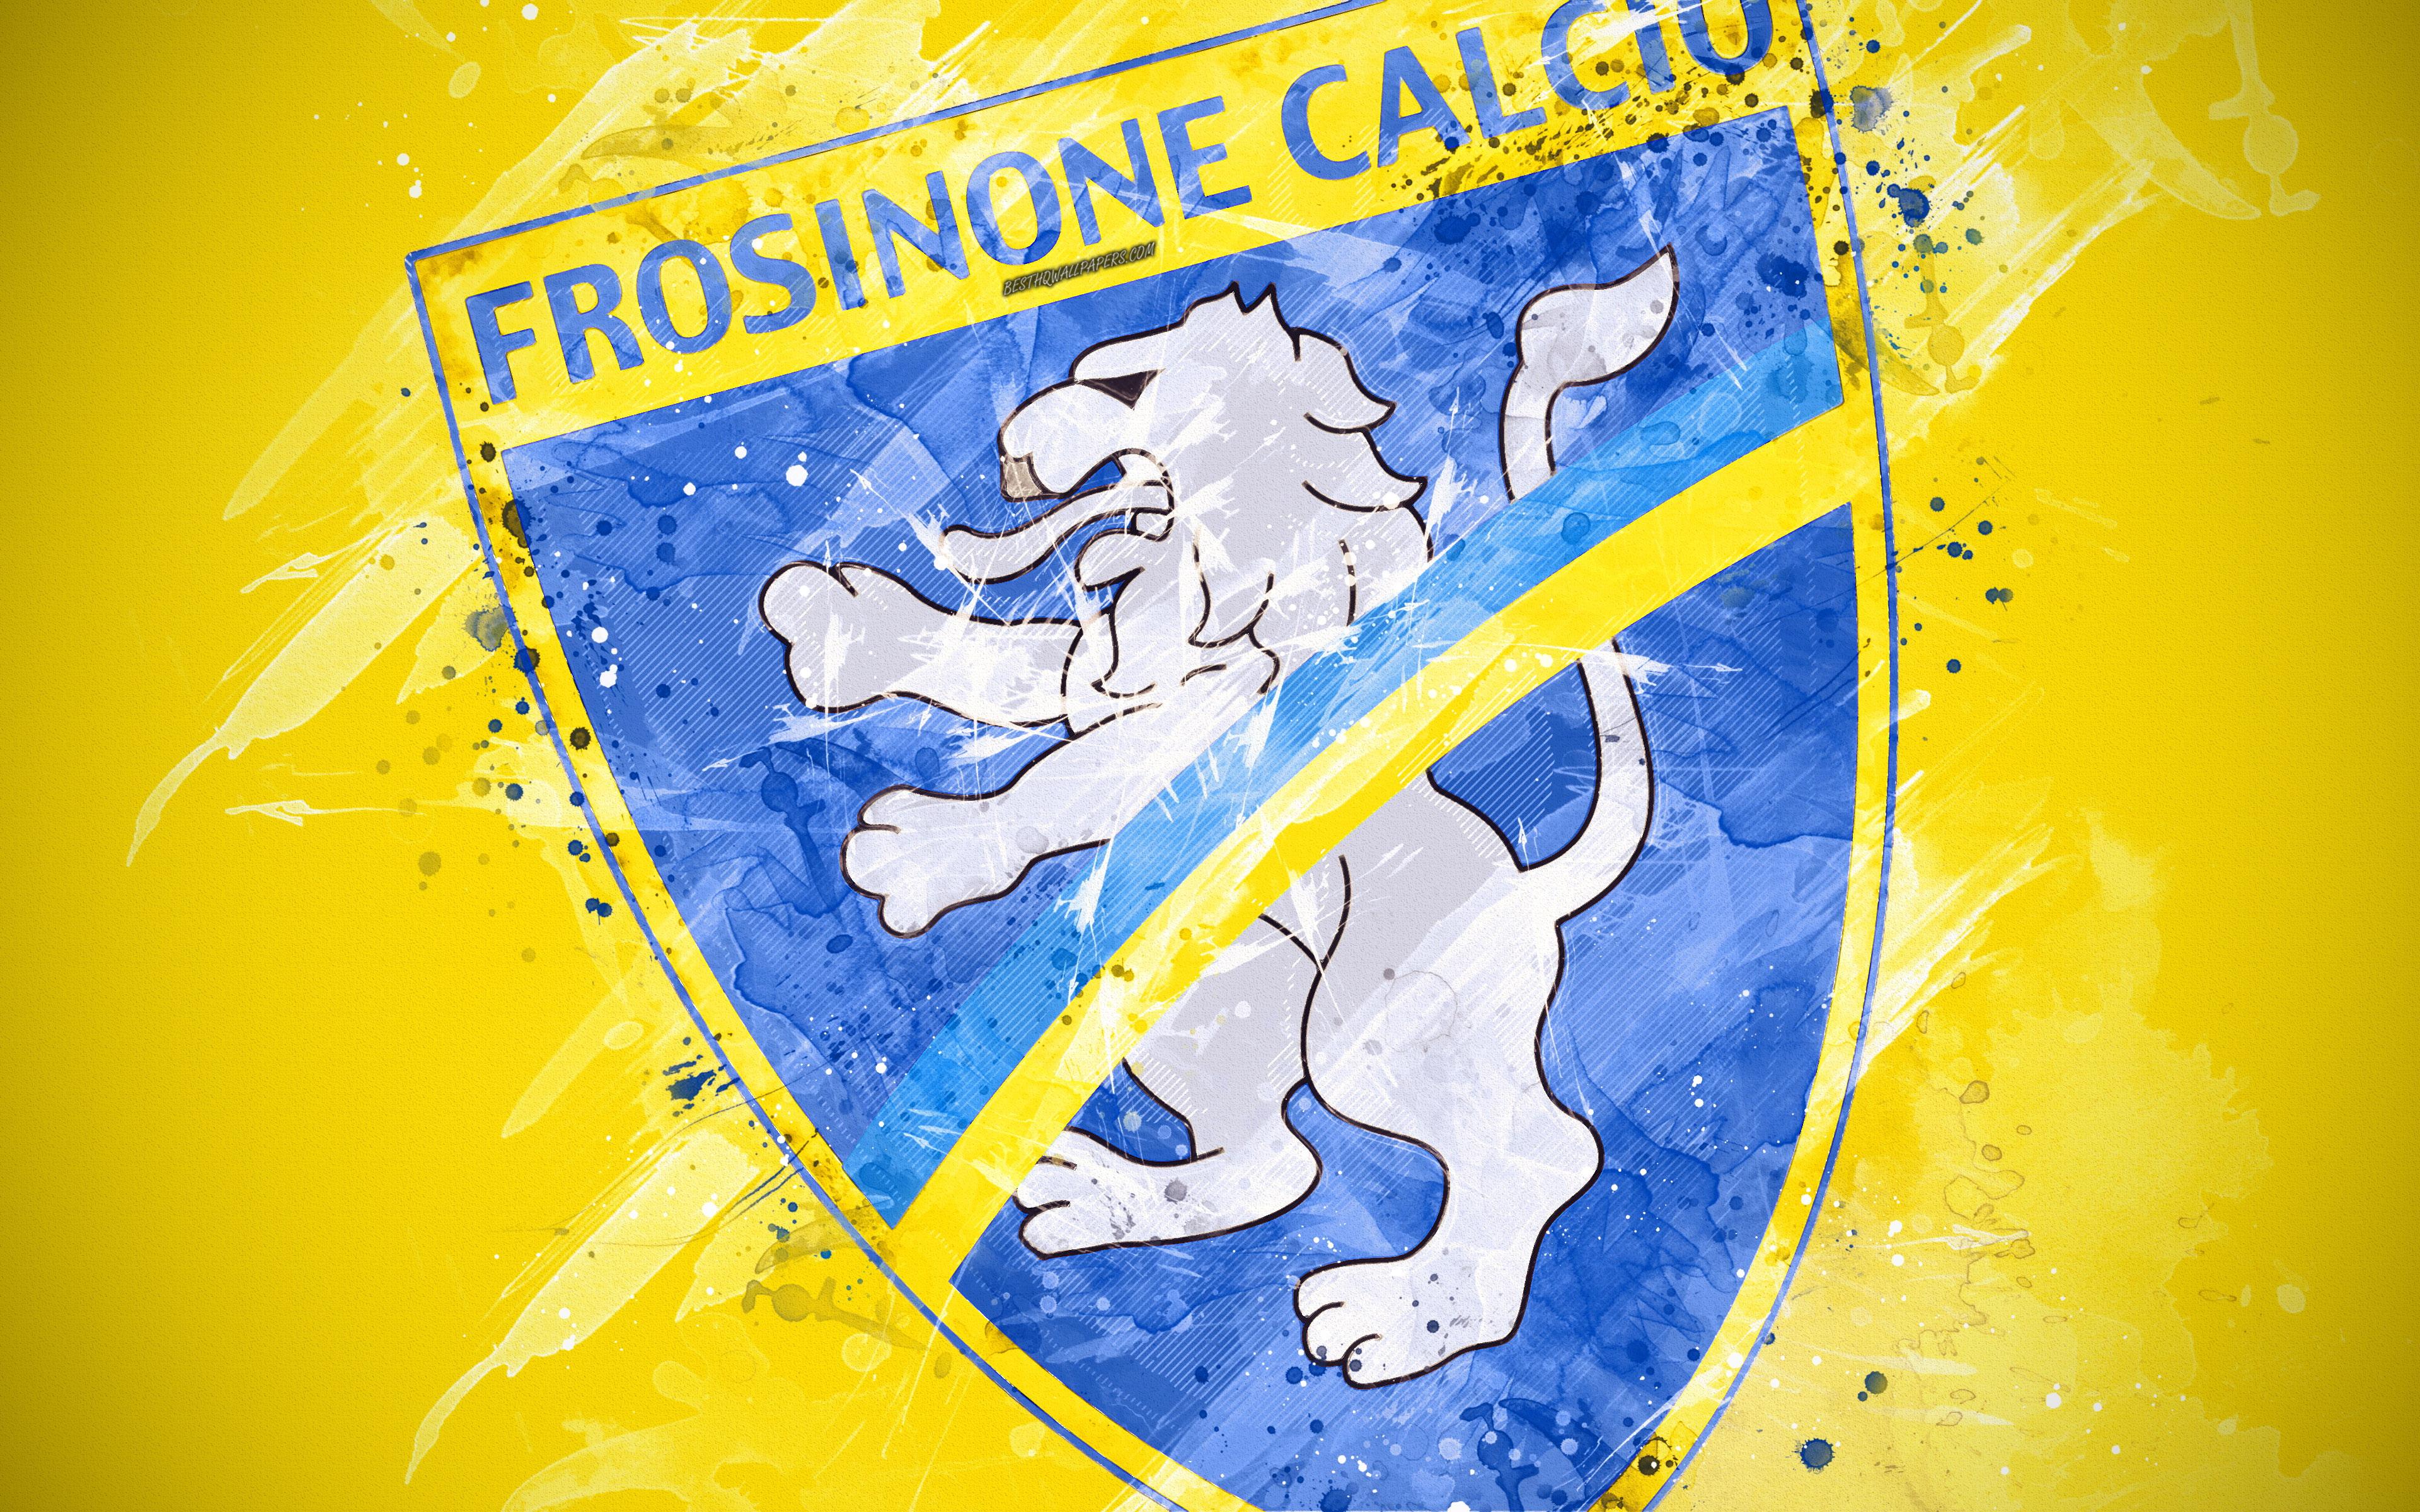 Download wallpaper Frosinone Calcio, 4k, paint art, creative